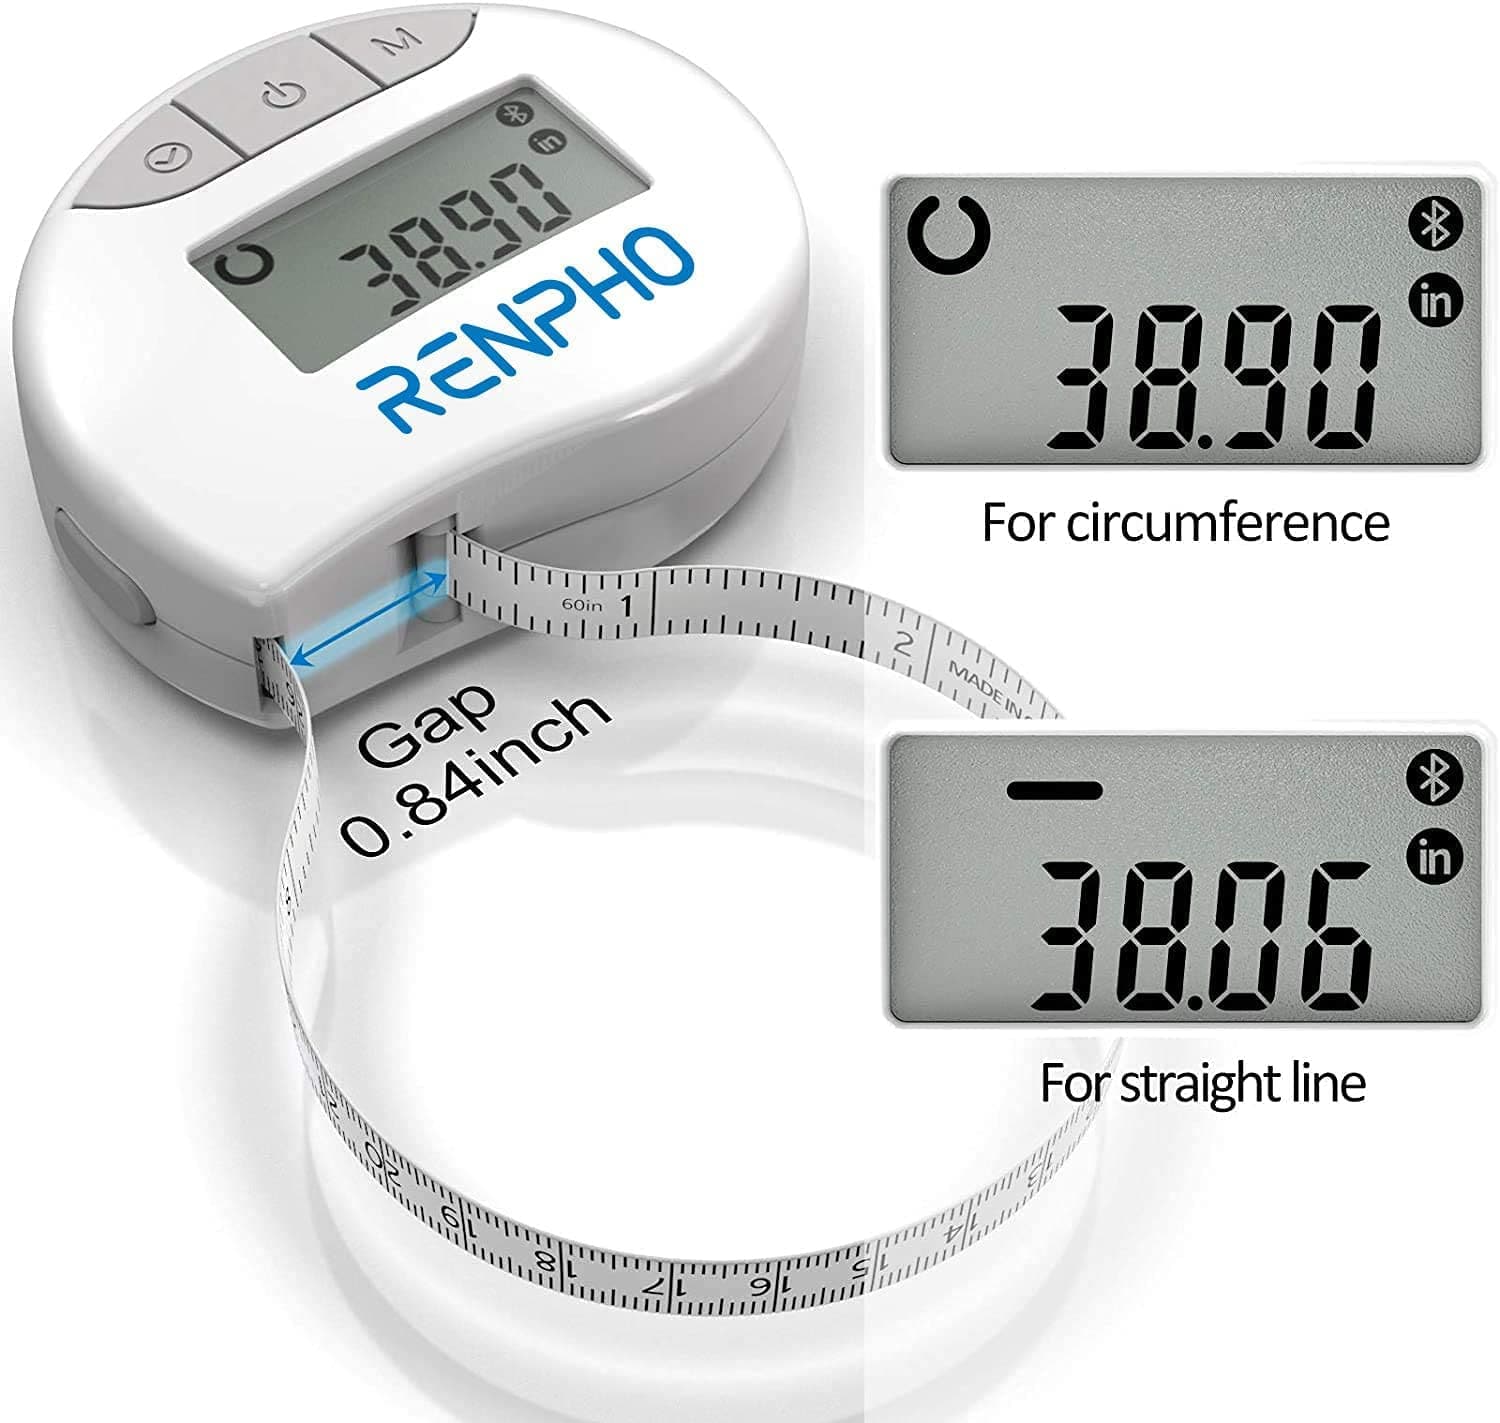 RENPHO Smart Body Measuring Tape : r/NeatThingsForSale